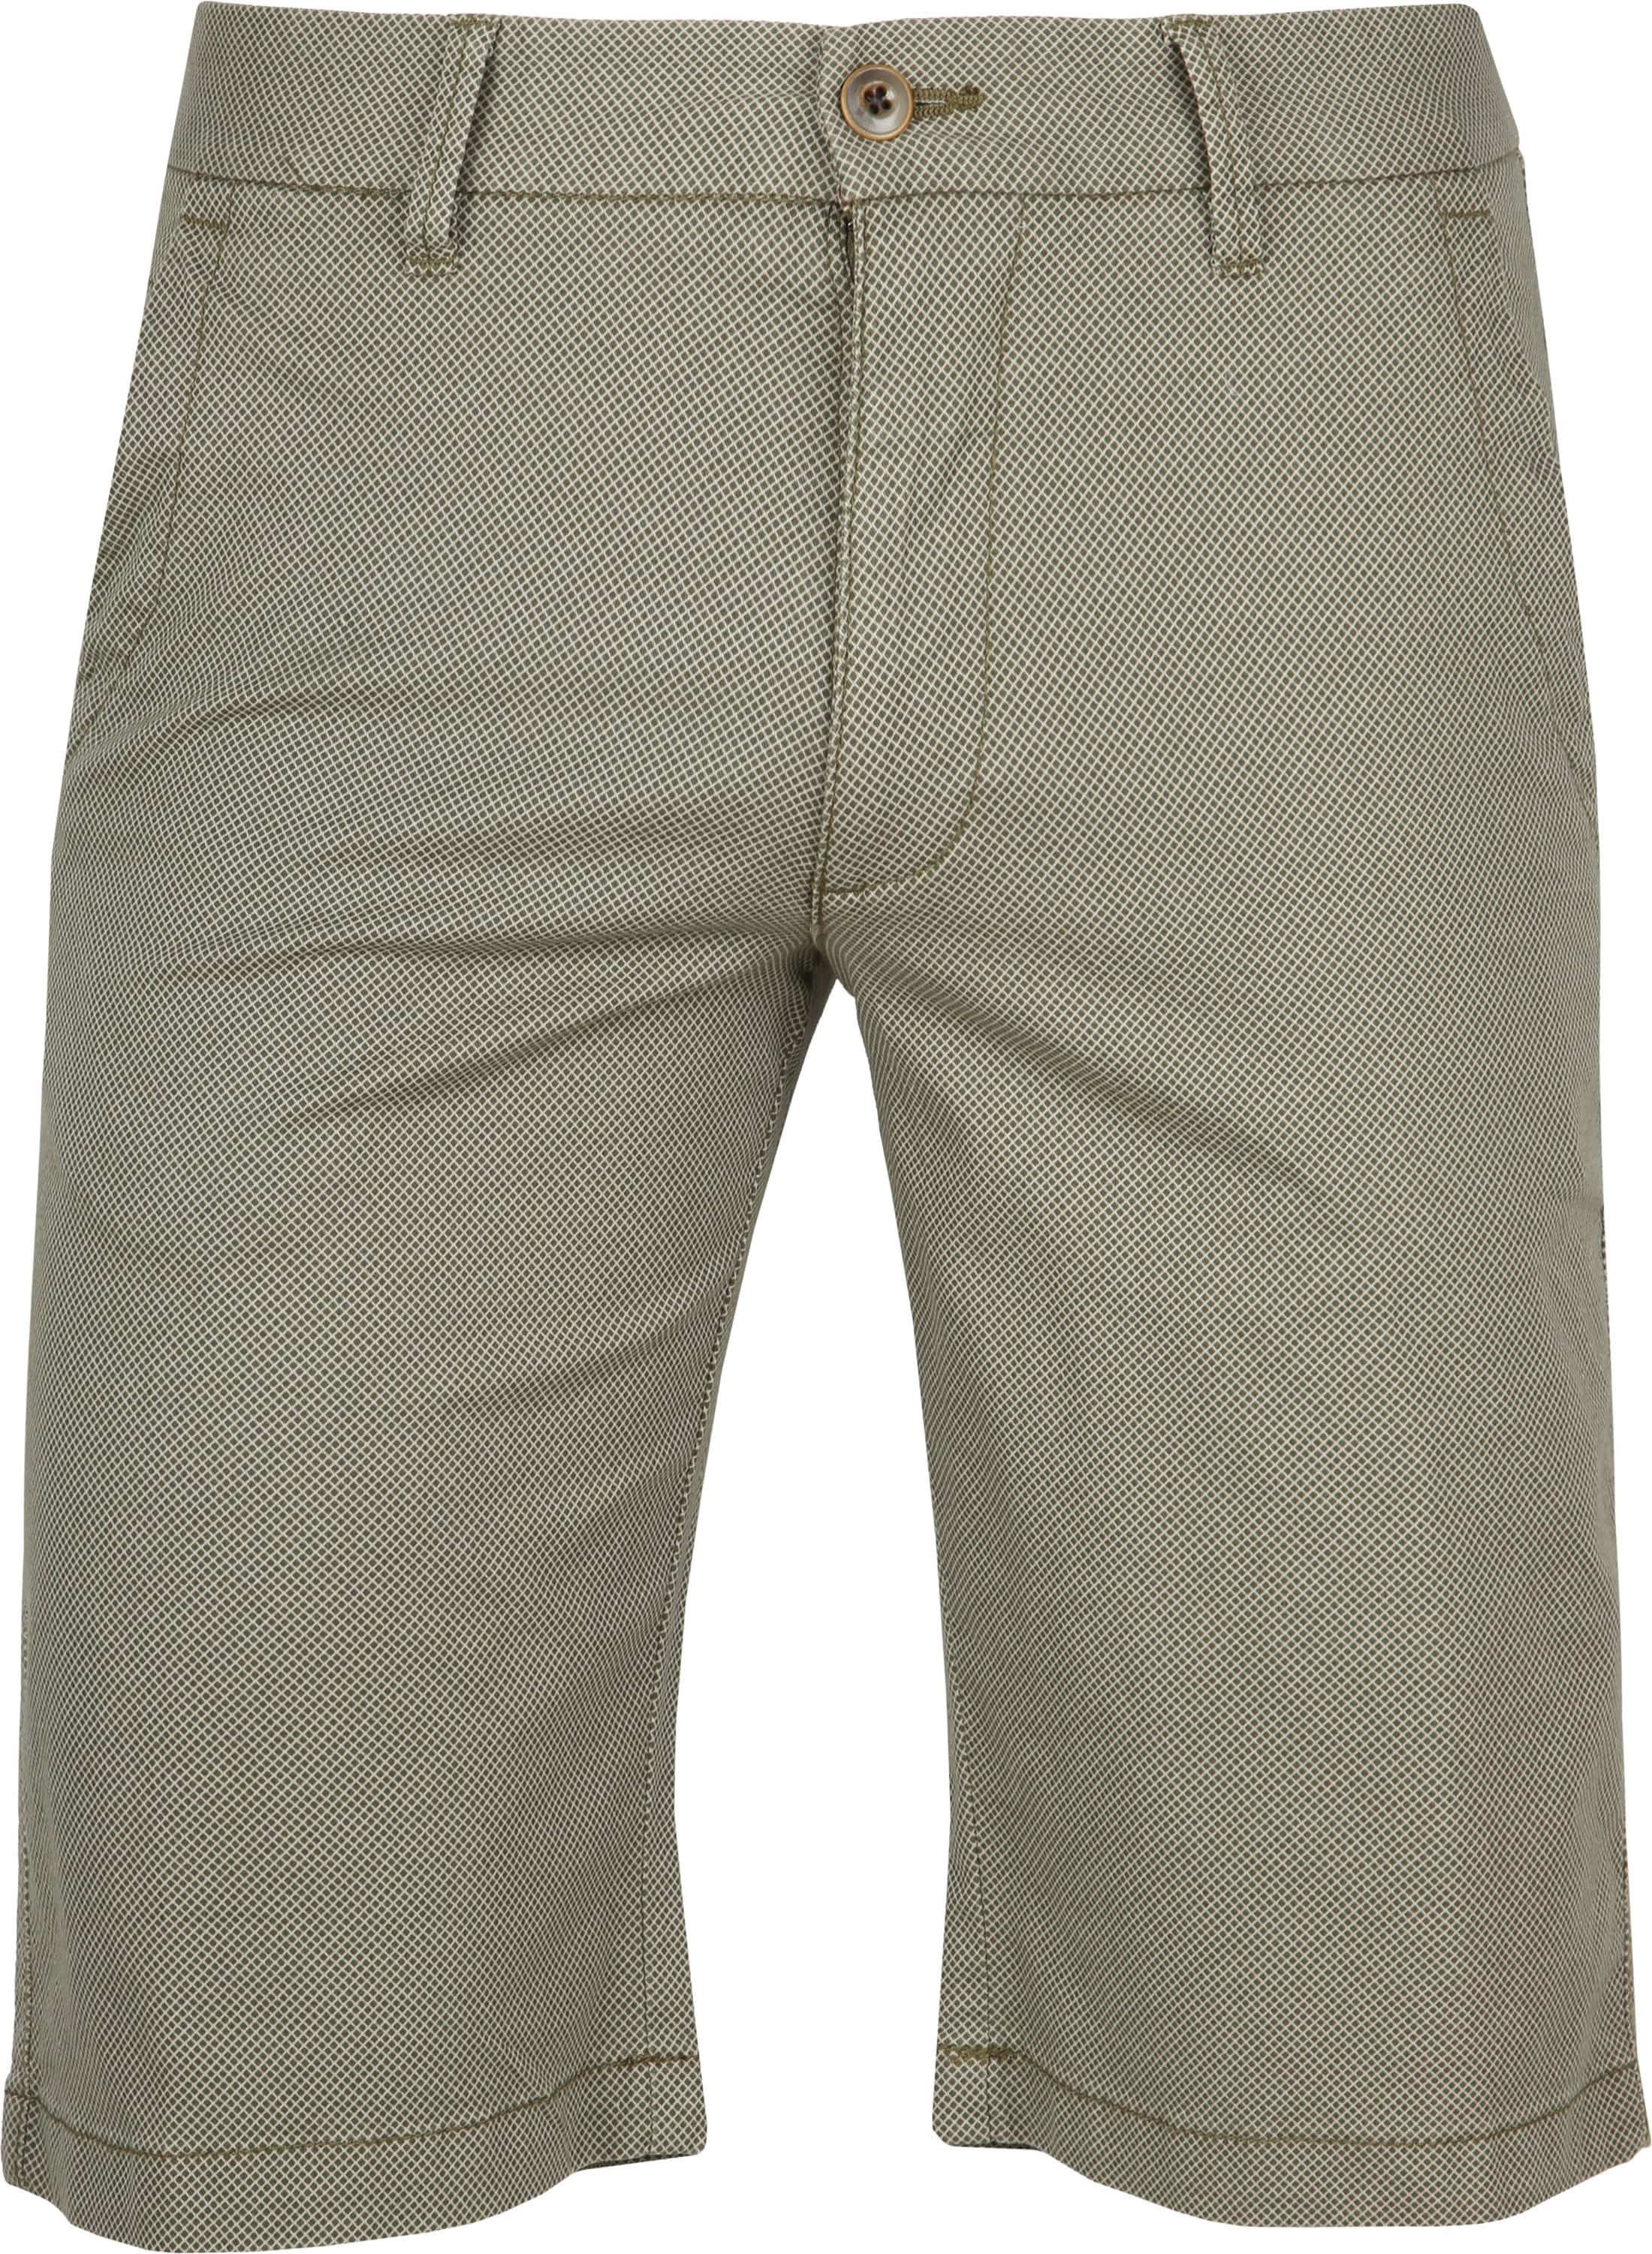 Gardeur Shorts Bermuda Dessin Green size 44-R